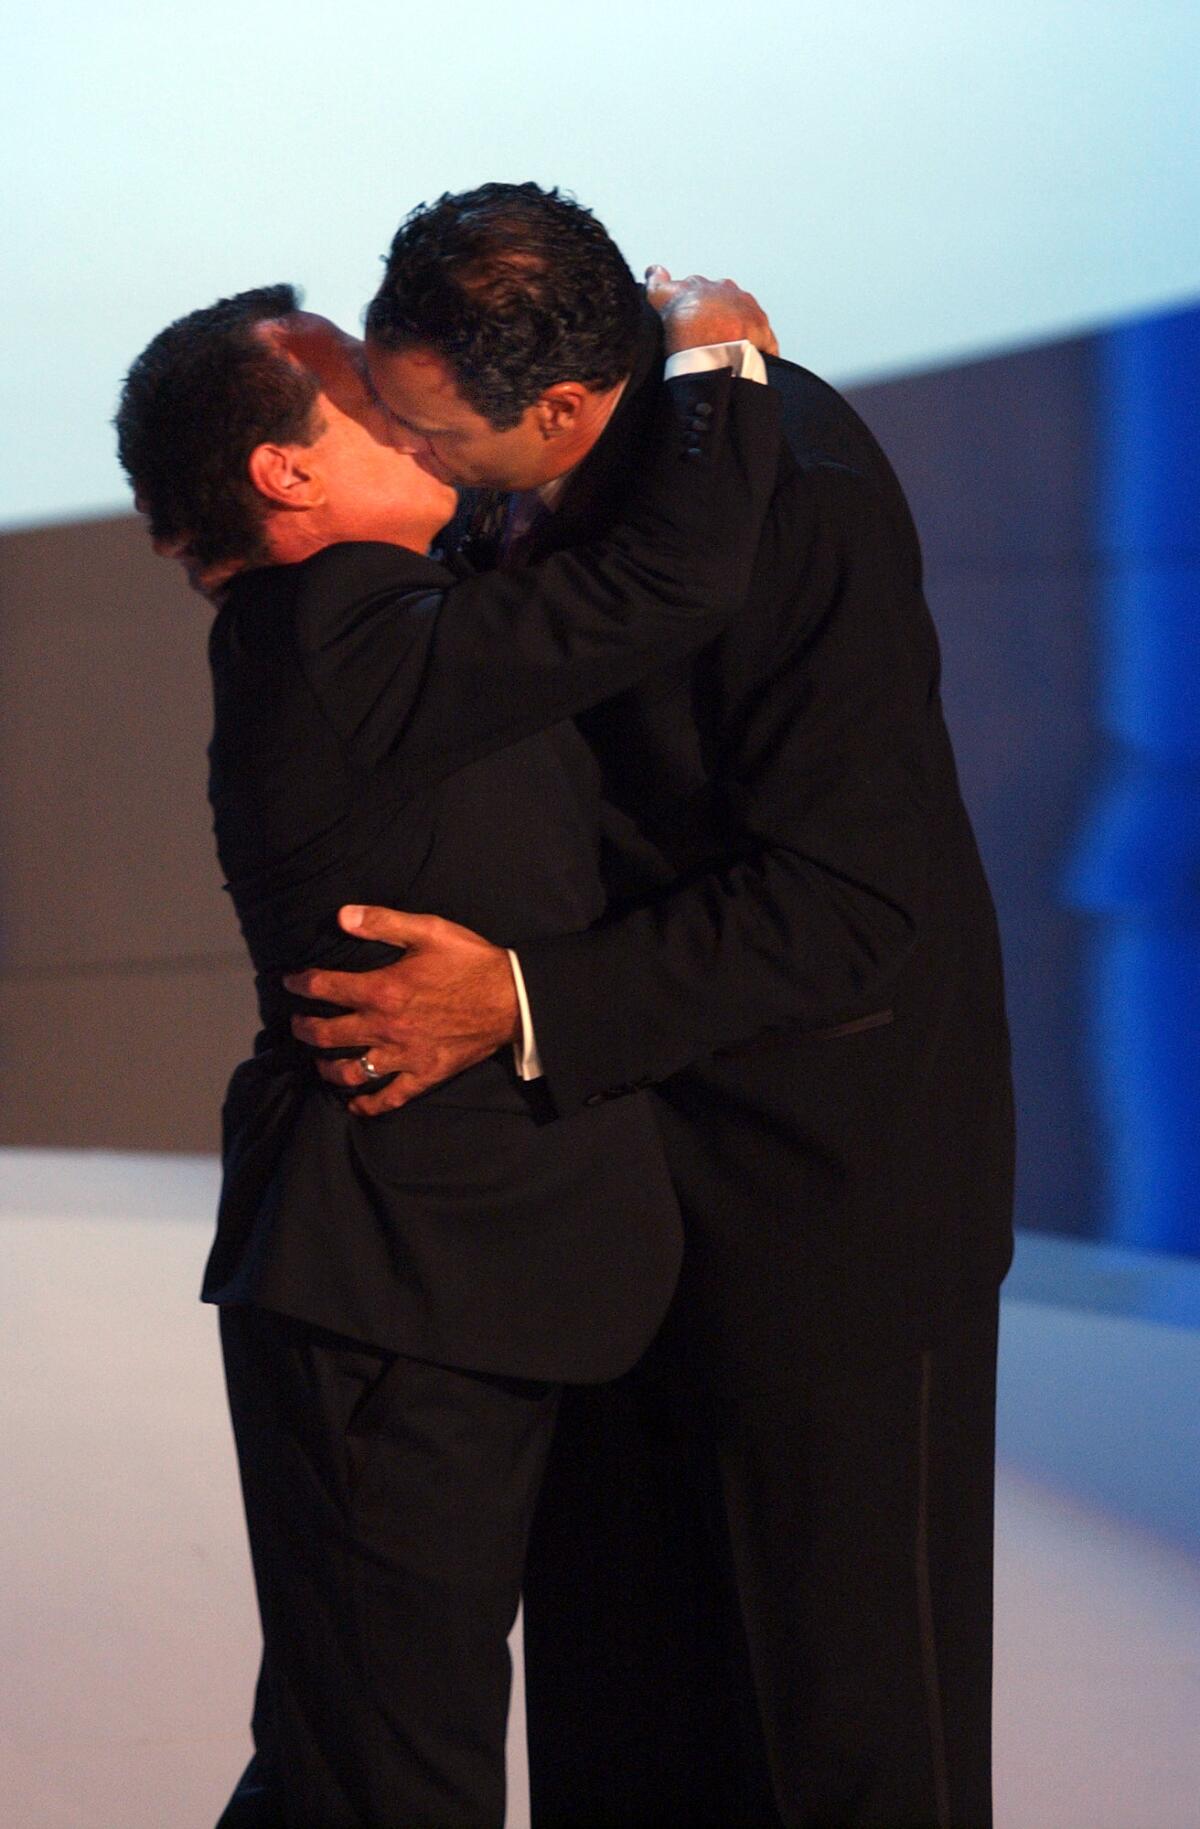 Garry Shandling and Brad Garrett share a comedic kiss.